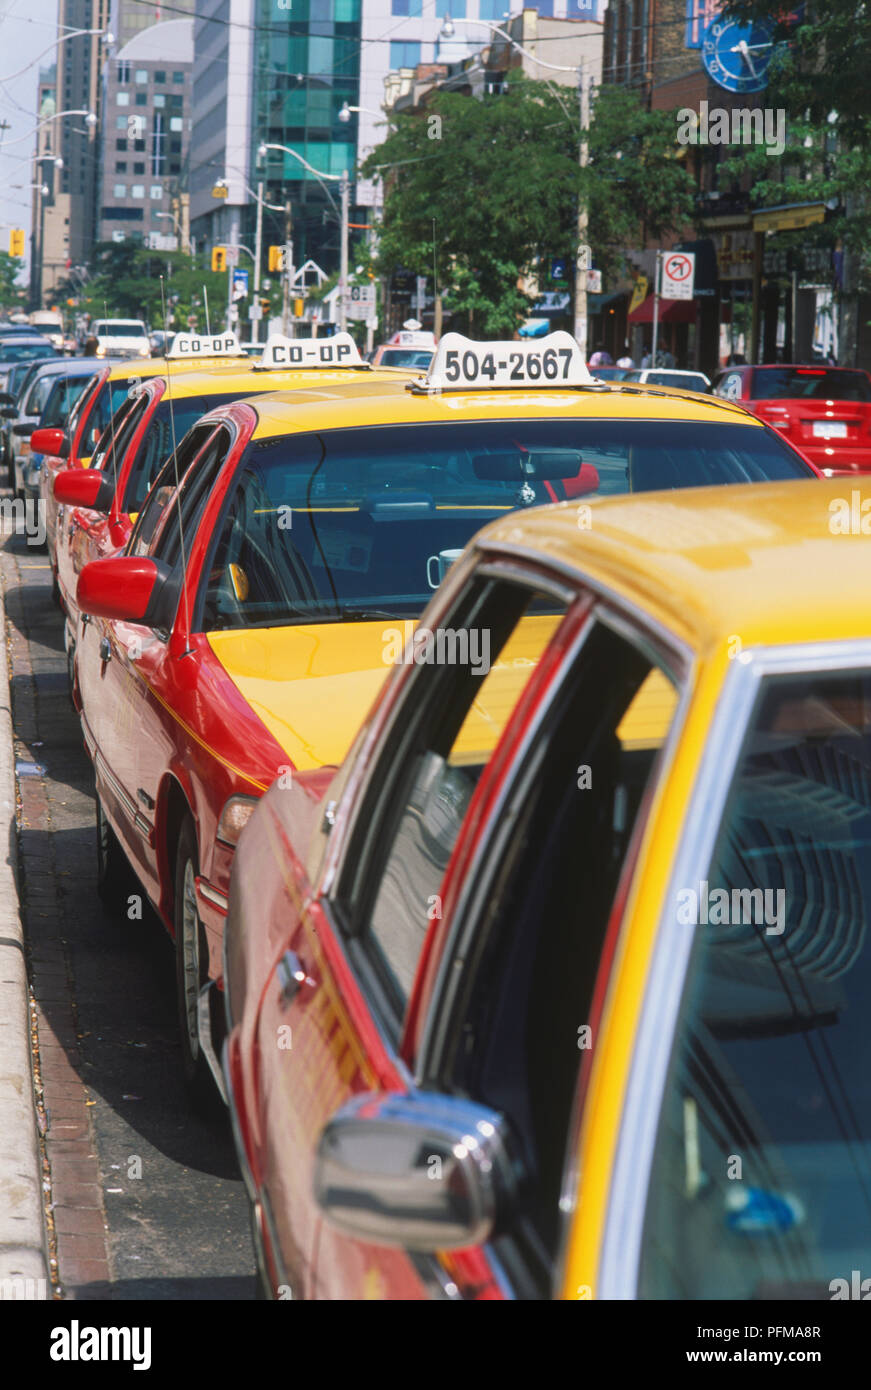 Kanada, Ontario, Toronto, rot-gelben Taxis aufgereiht am Stand, in der Nähe. Stockfoto